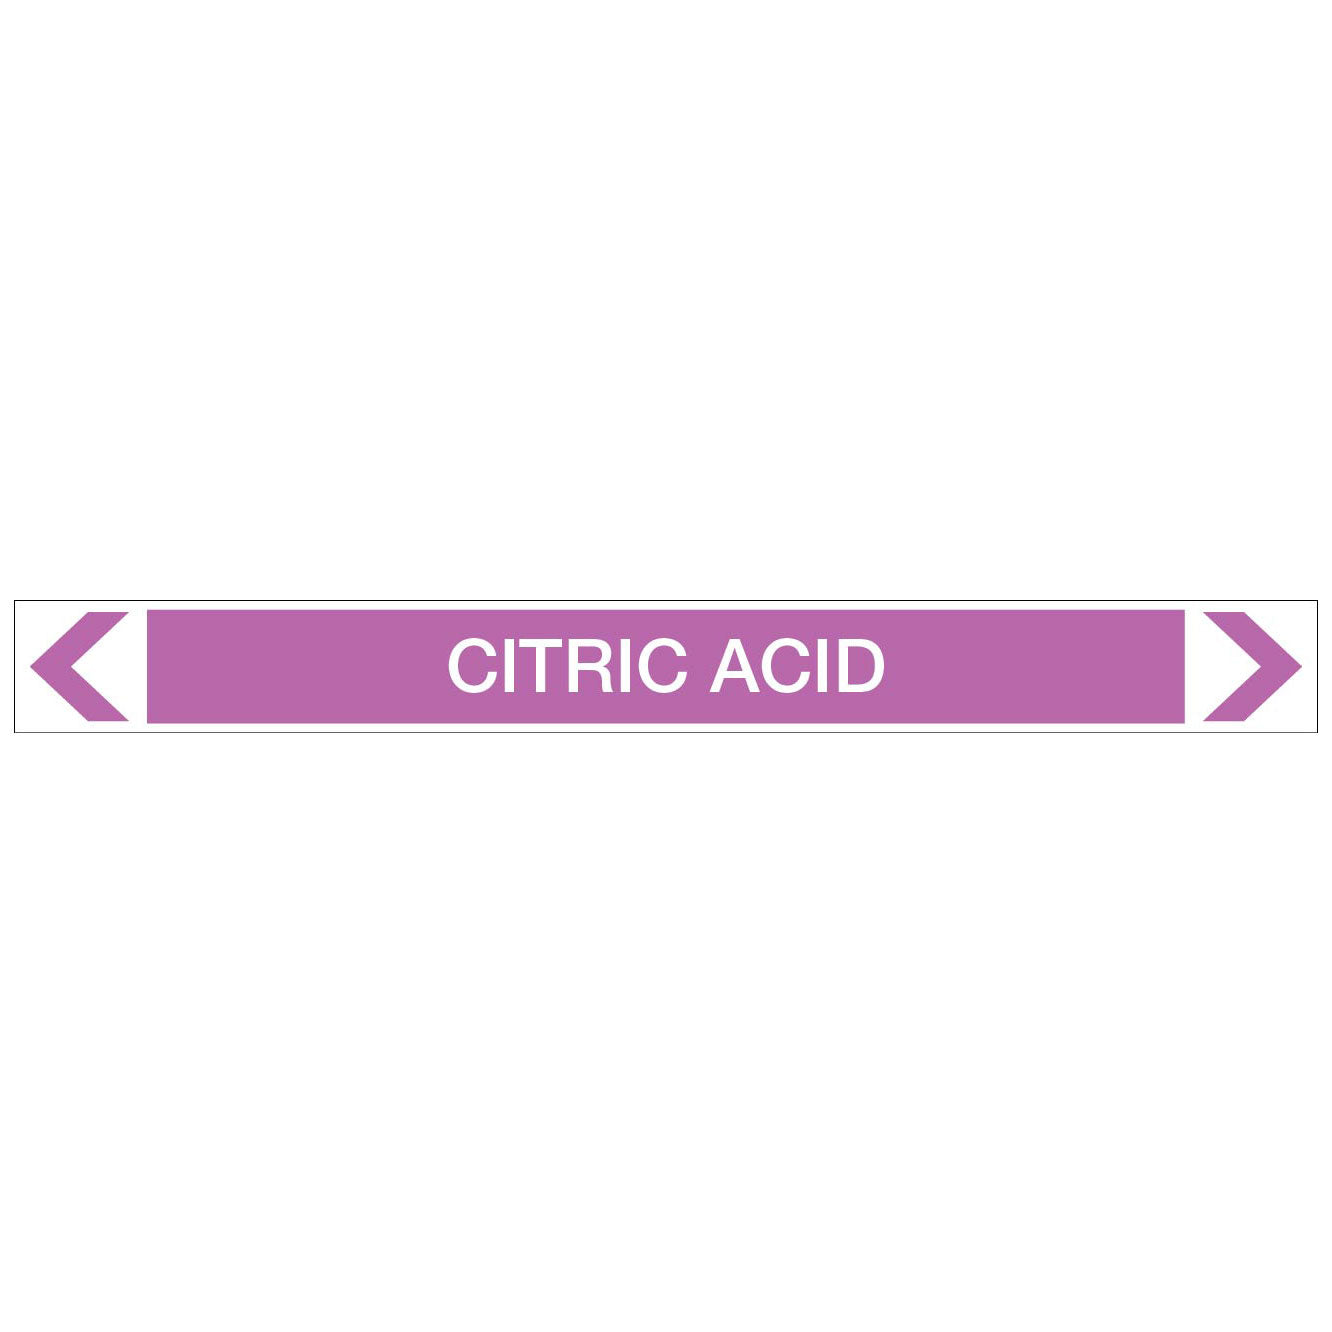 Alkalis / Acids - Citric Acid - Pipe Marker Sticker